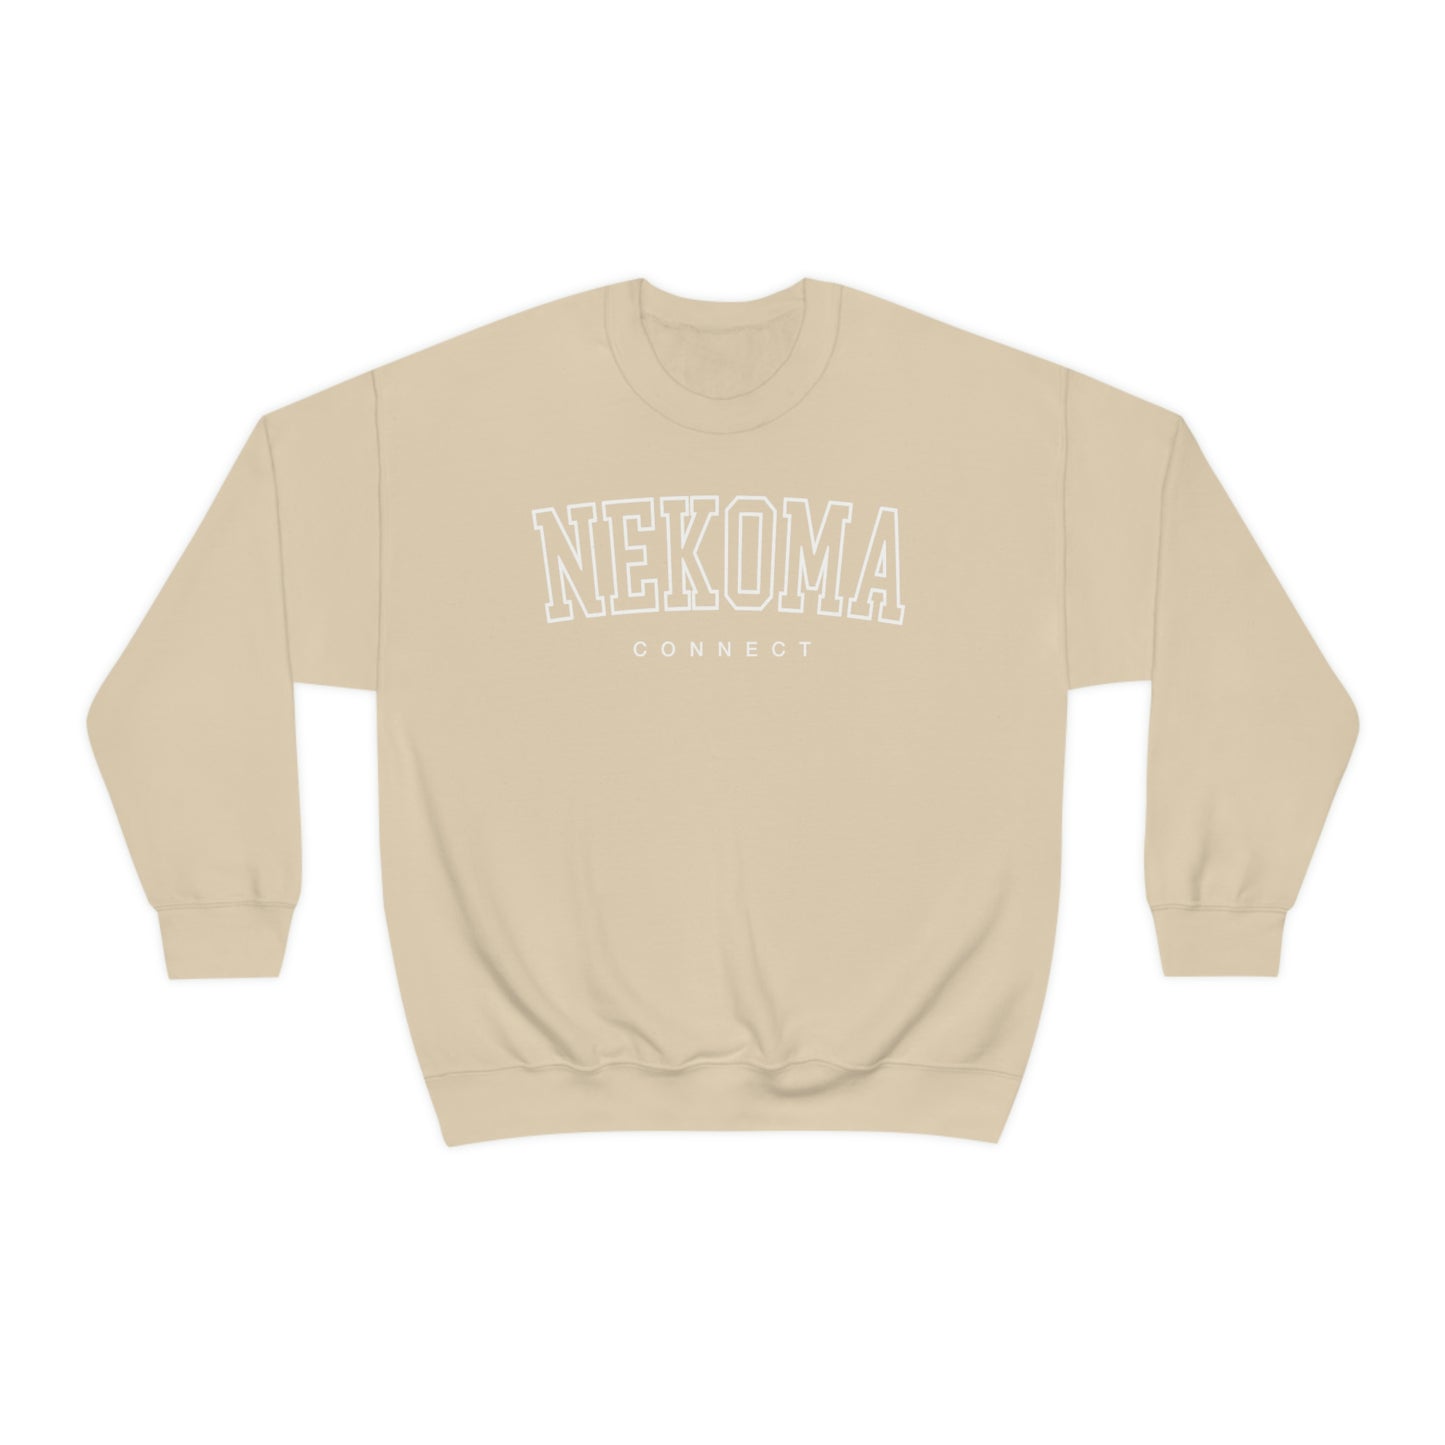 Nekomas Connect slogan sweatshirt jumper pullover